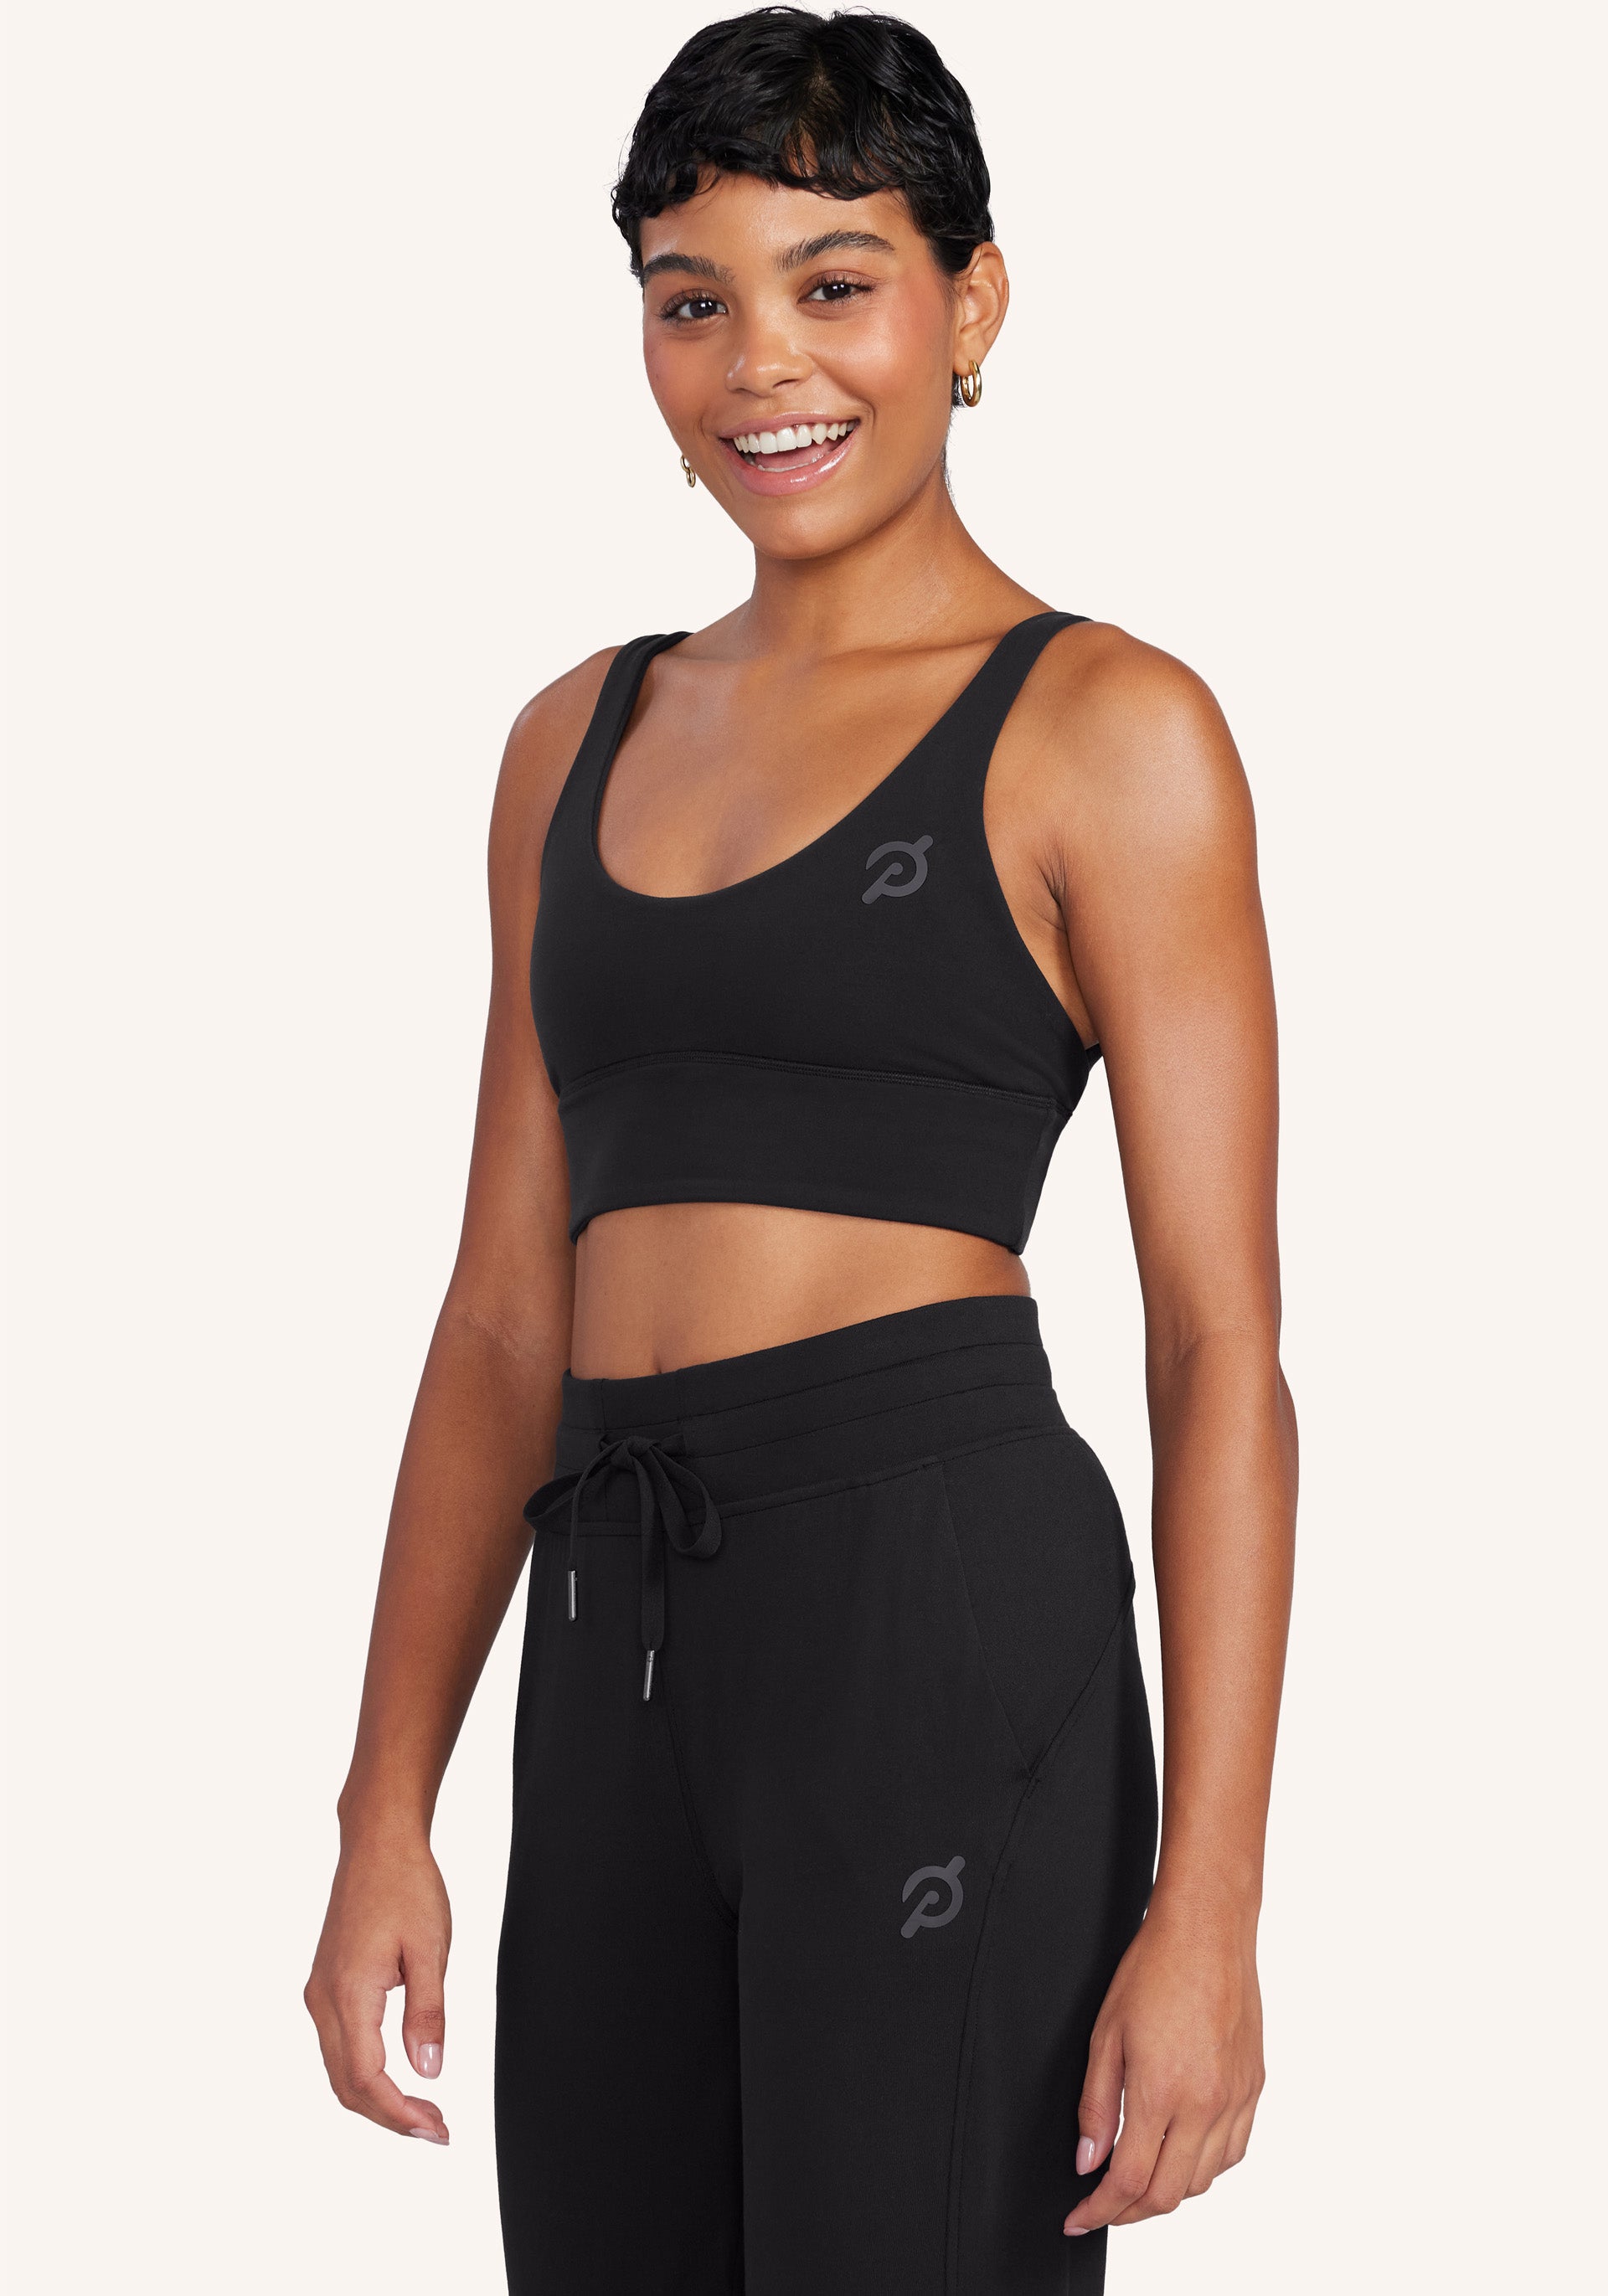 Lululemon Sports Bra Cross Back Bralette Size 4 Black Harness Graphic  Workout